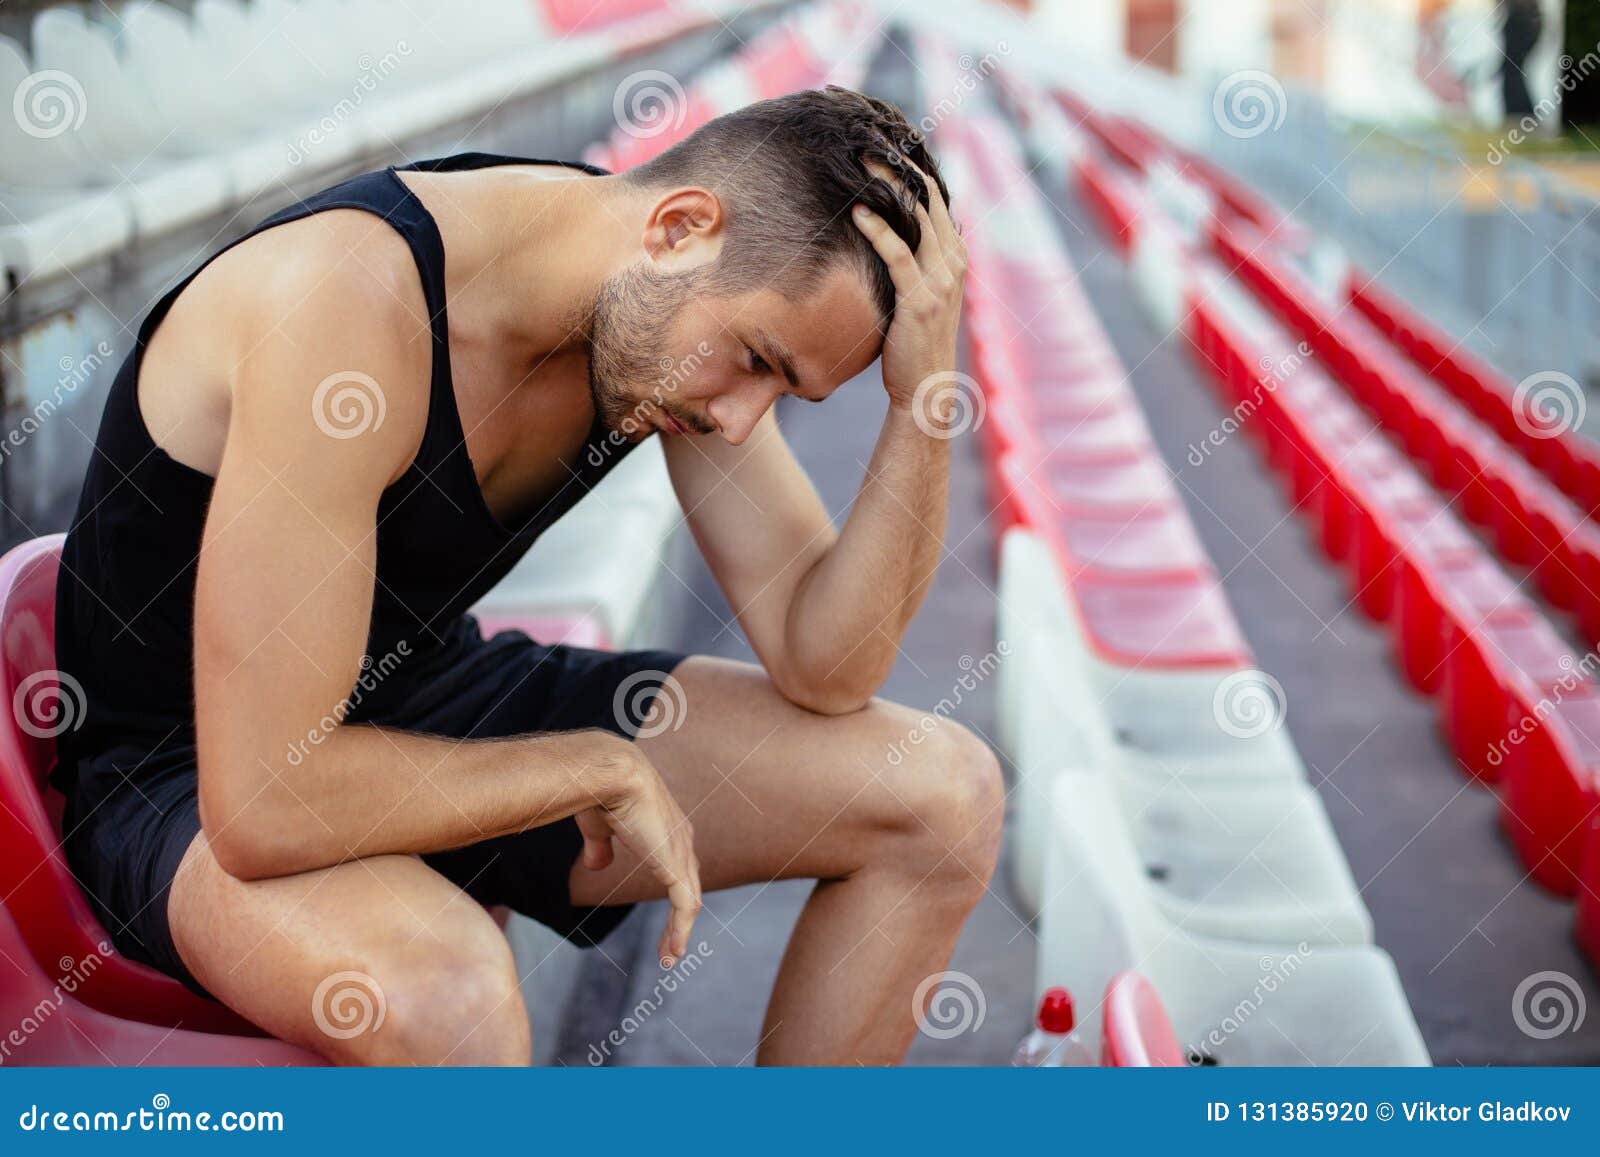 depressed athlete man sitting head in hands on stadium seats